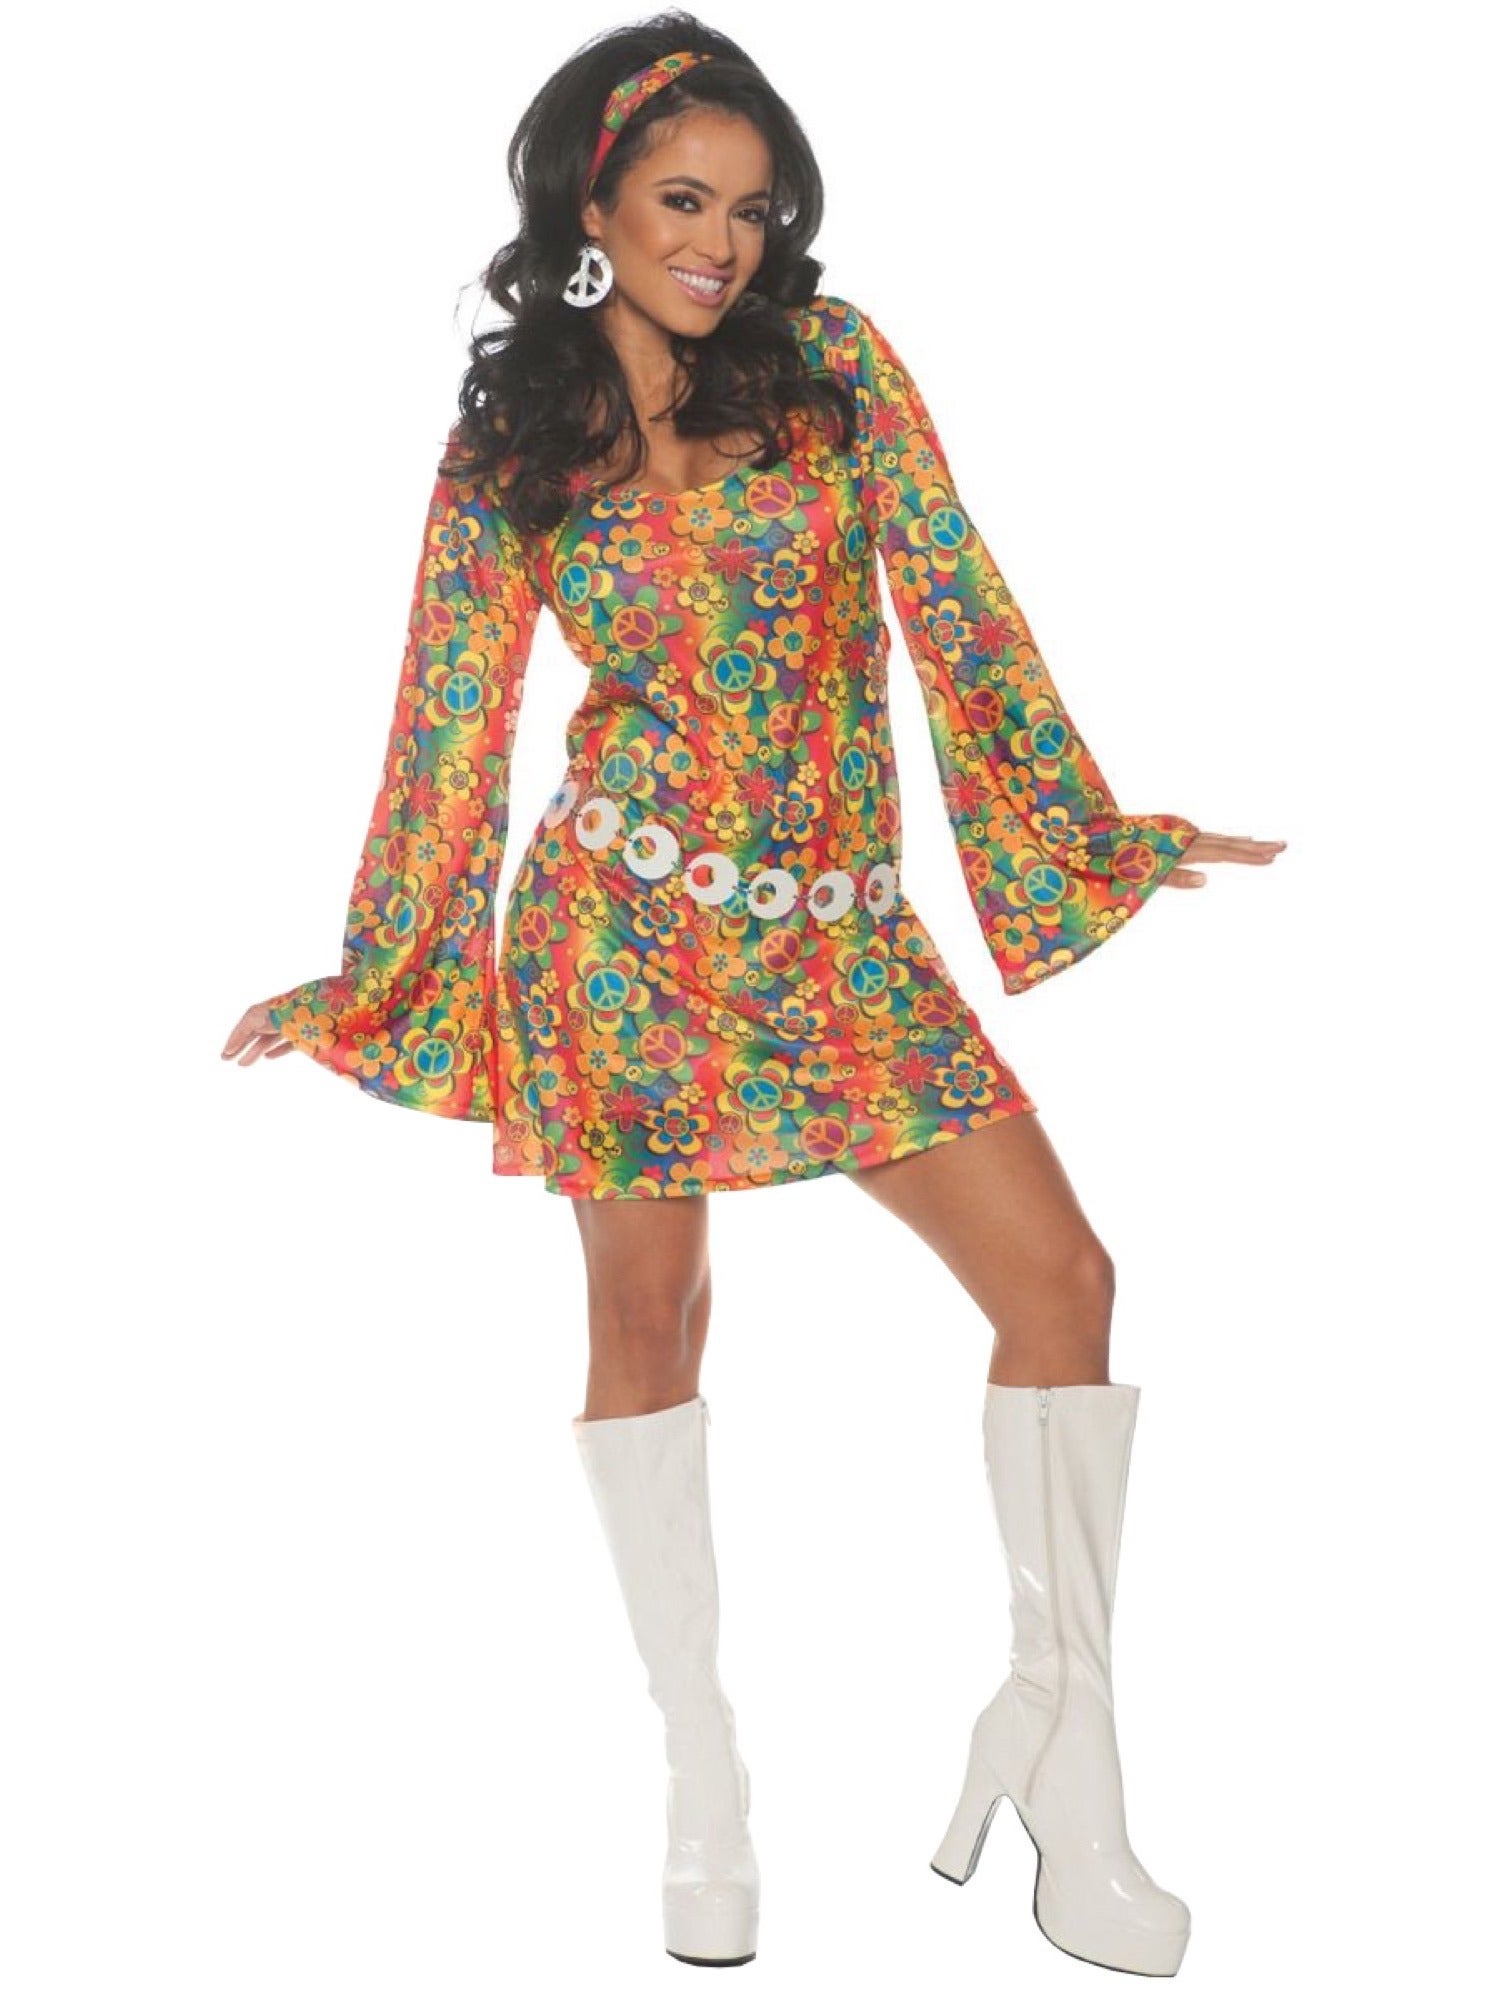 Hobbypos Summer Boogie 1960s Disco Retro Groovy Hippie Hippy Adult Womens Costume